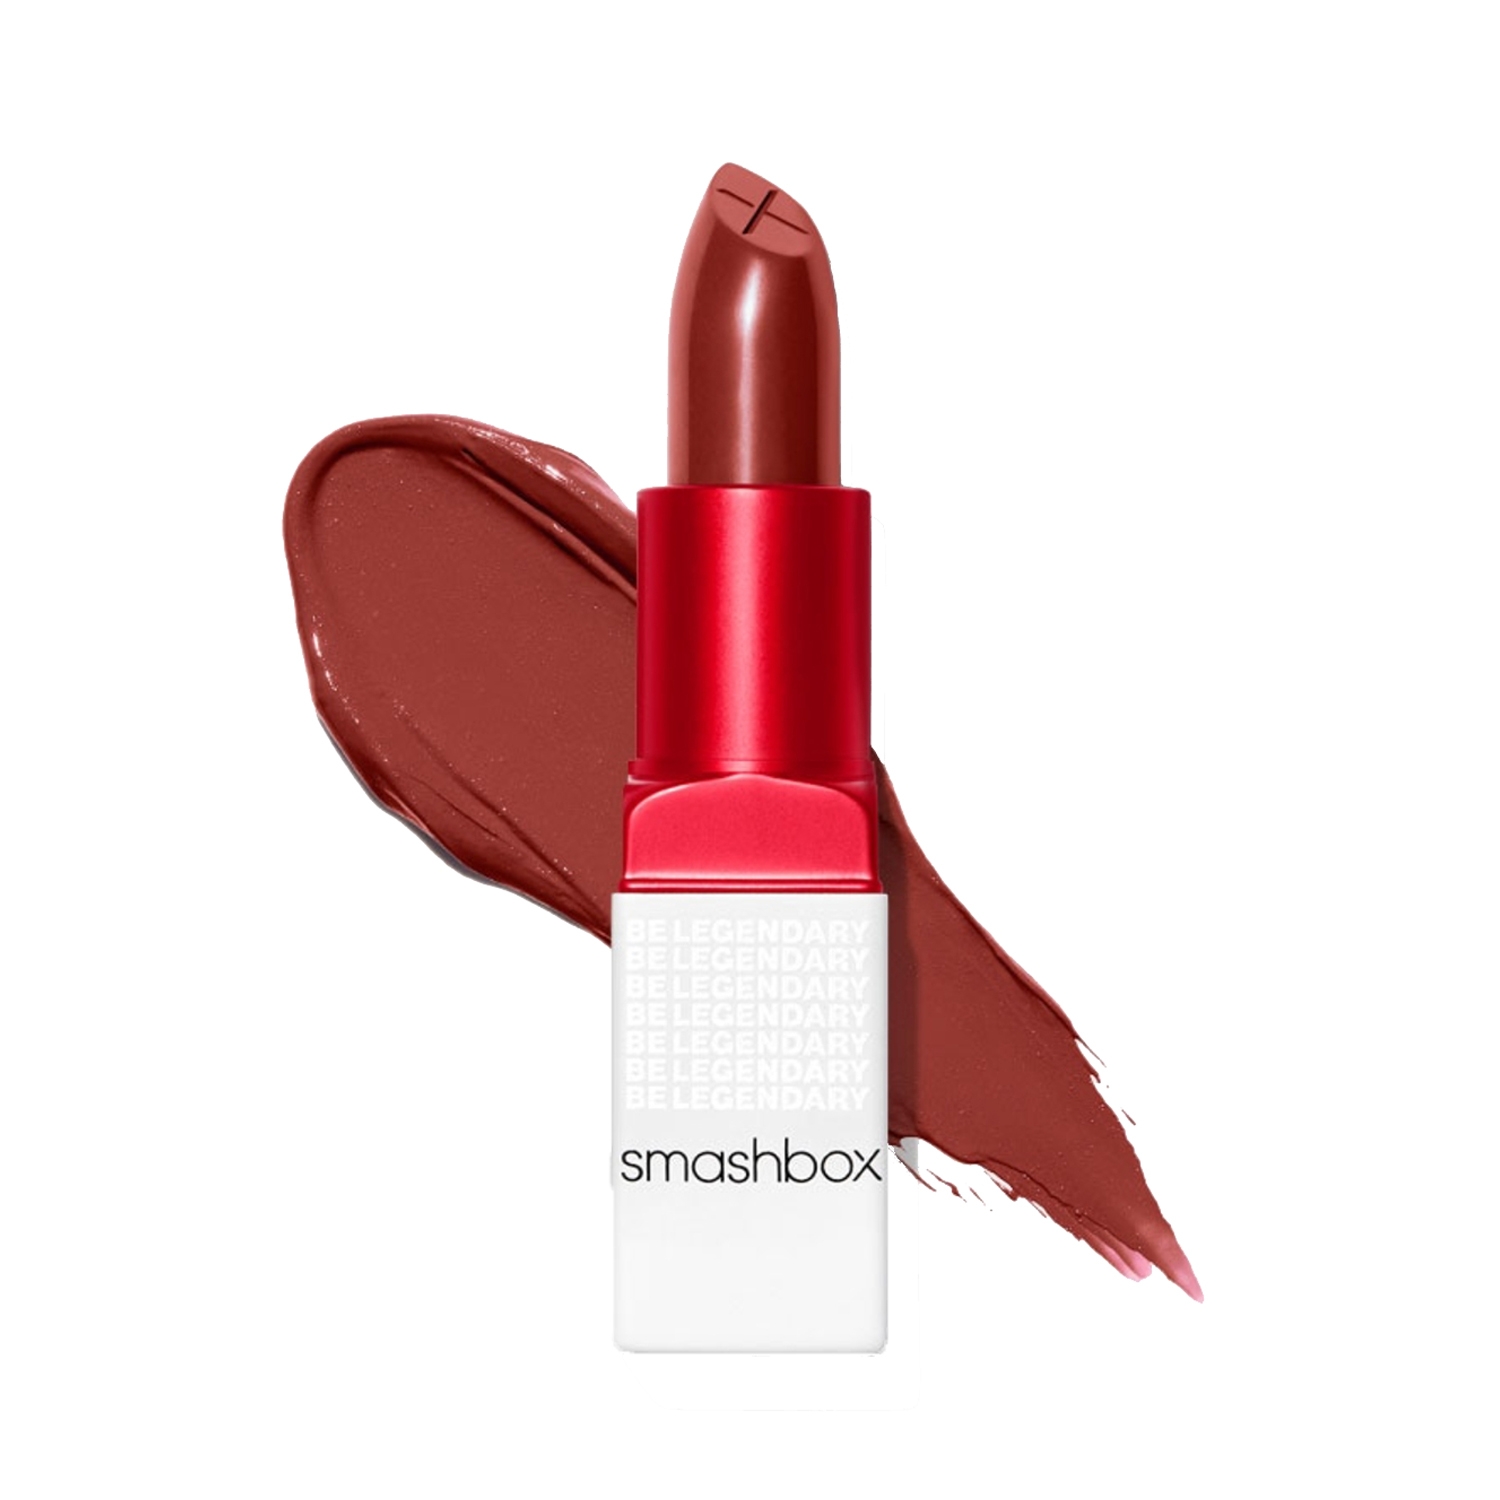 Smashbox | Smashbox Be Legendary Prime & Plush Lipstick - Deep Brick Red (3.4g)